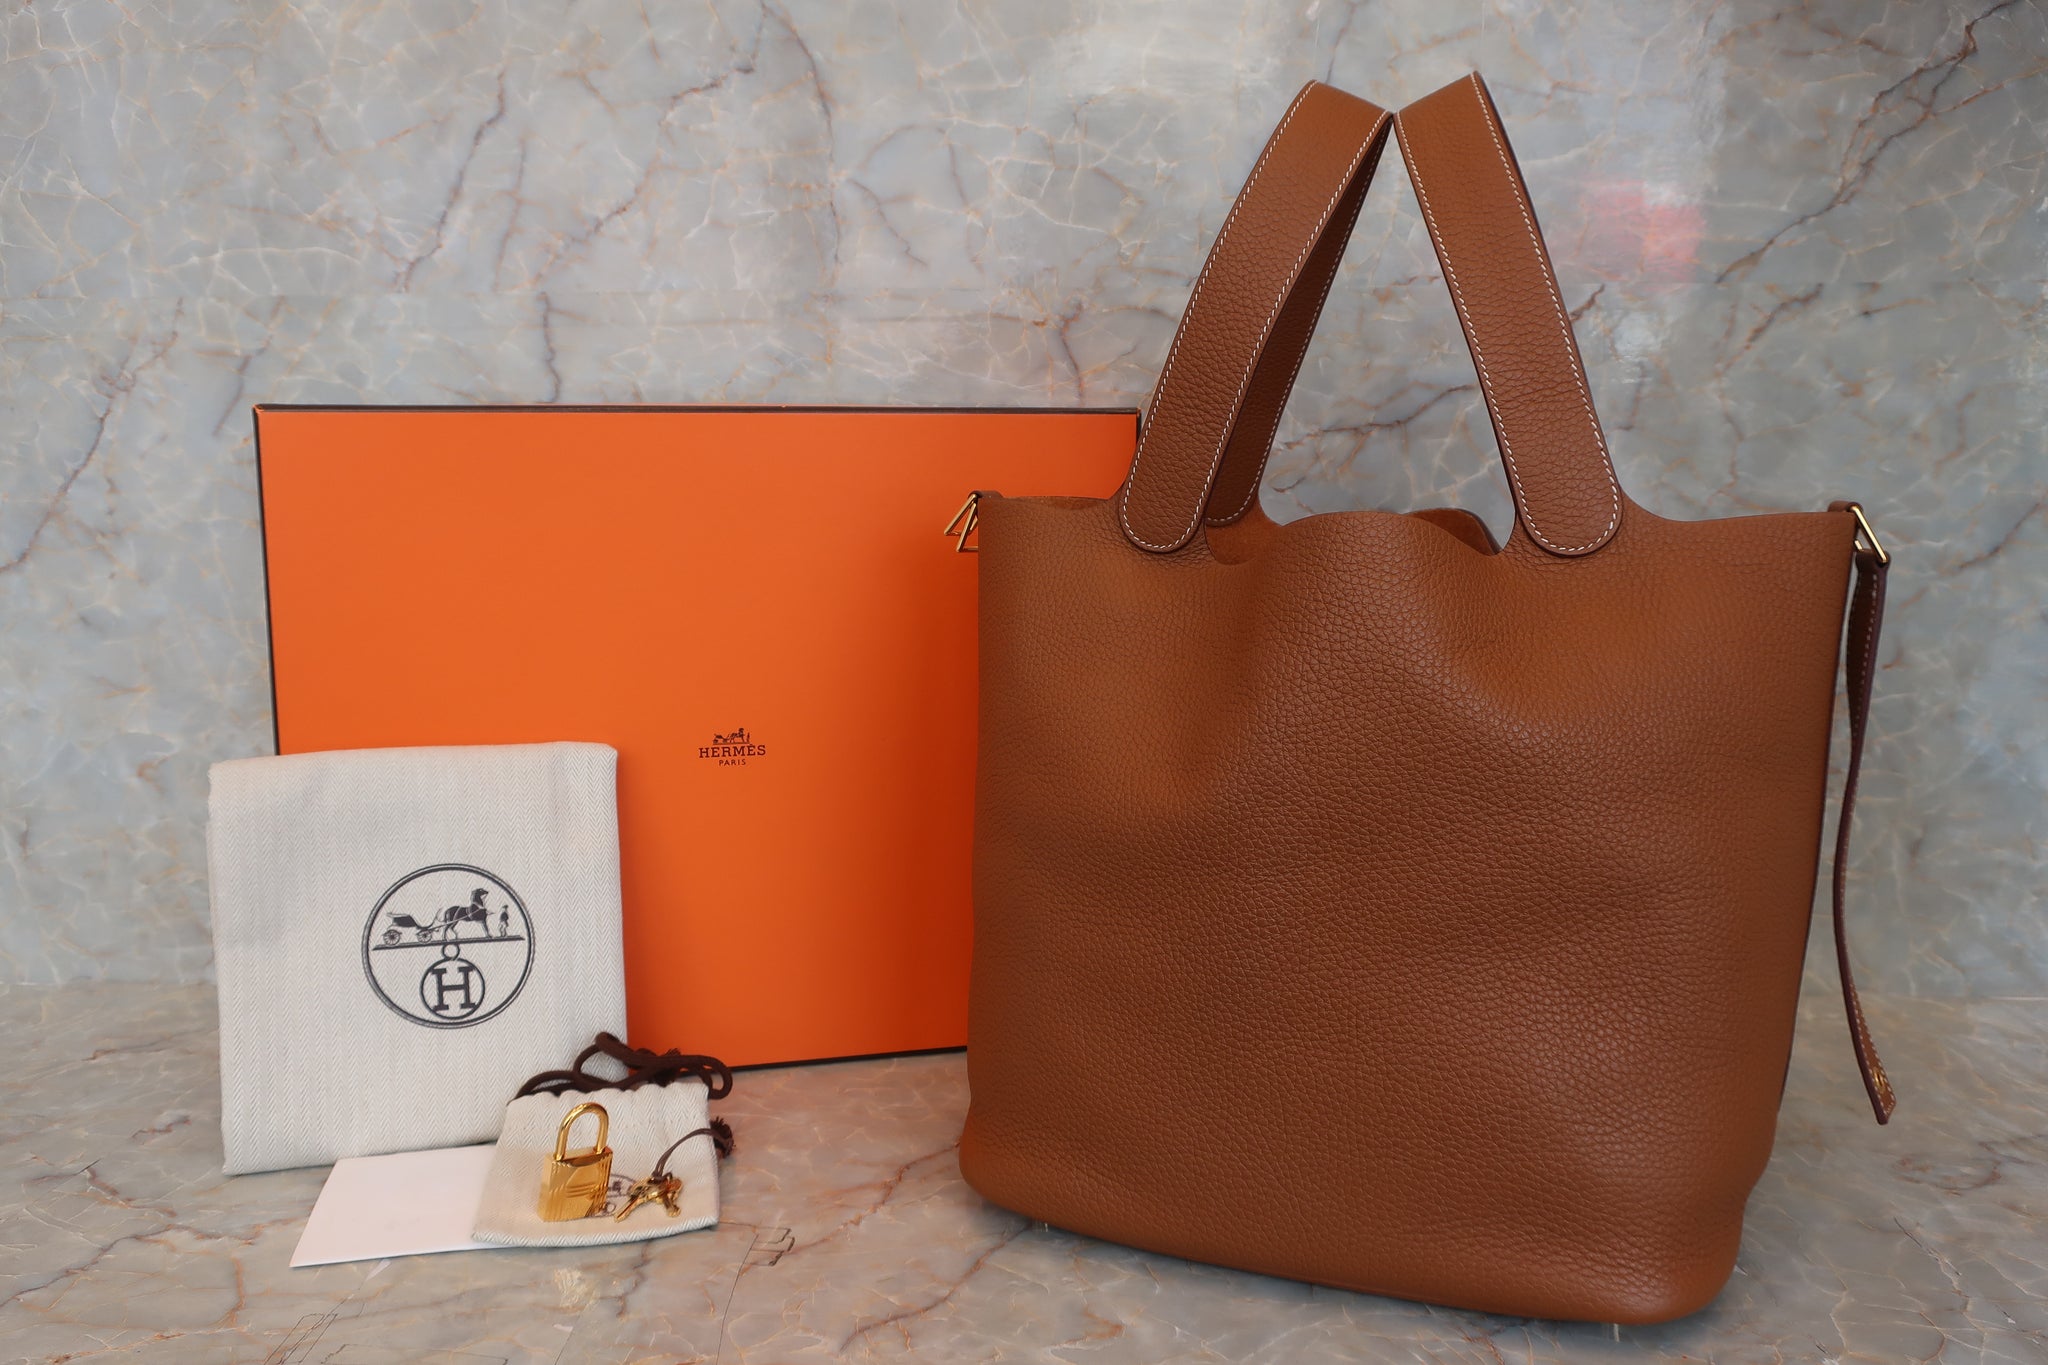 HERMES Bag Picotin Lock GM Orange Silver Hardware Handbag Tote Ladies